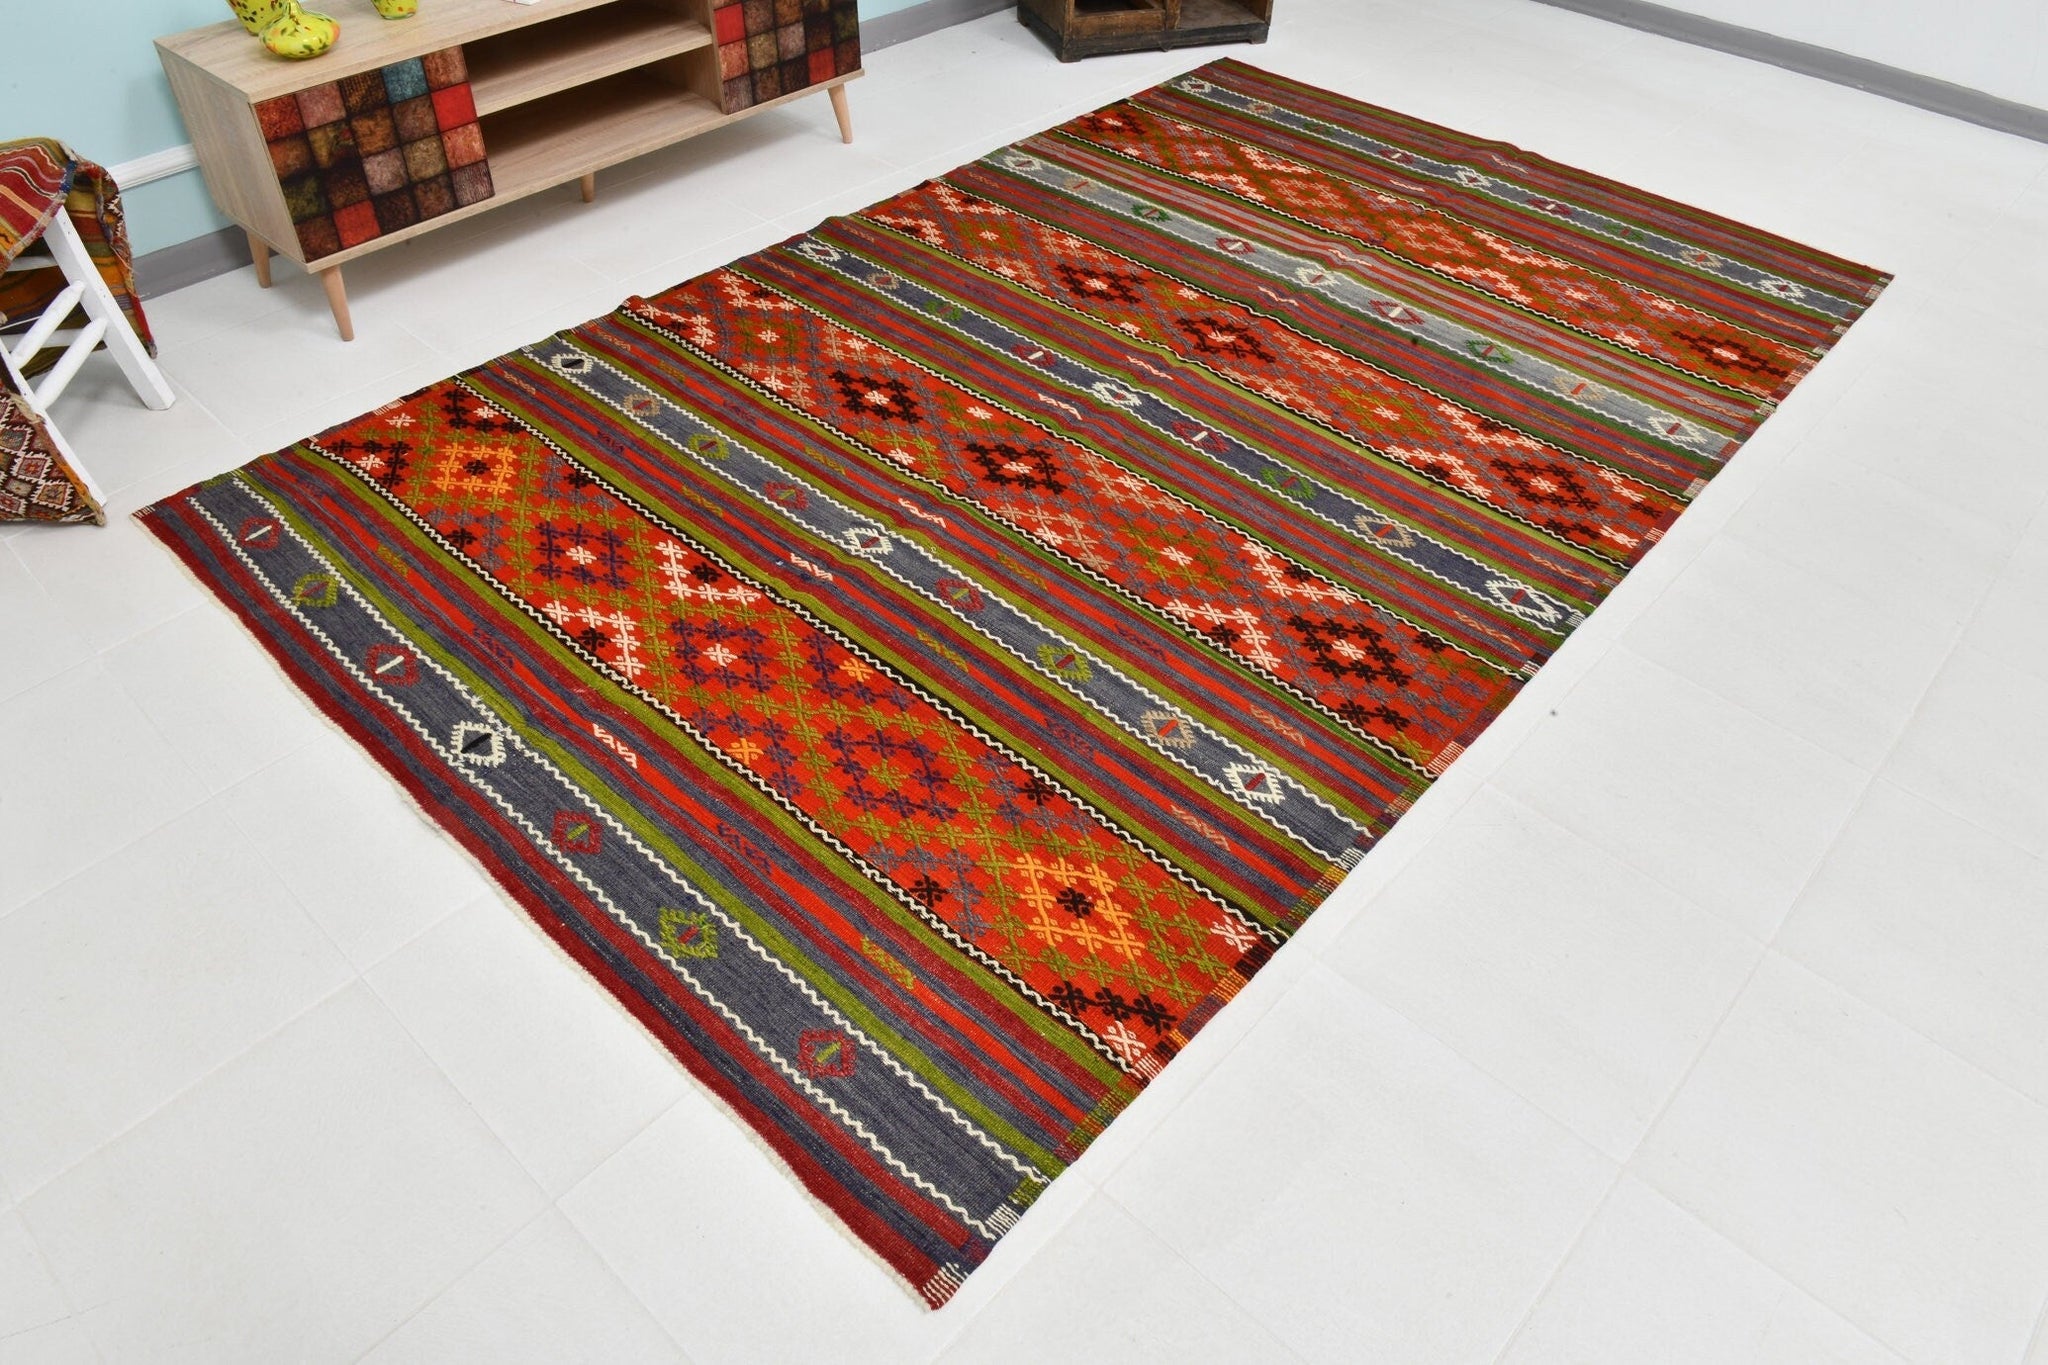 6’ x 10’ Turkish Kilim Old Rug - 1519 - Zengoda Shop online from Artisan Brands